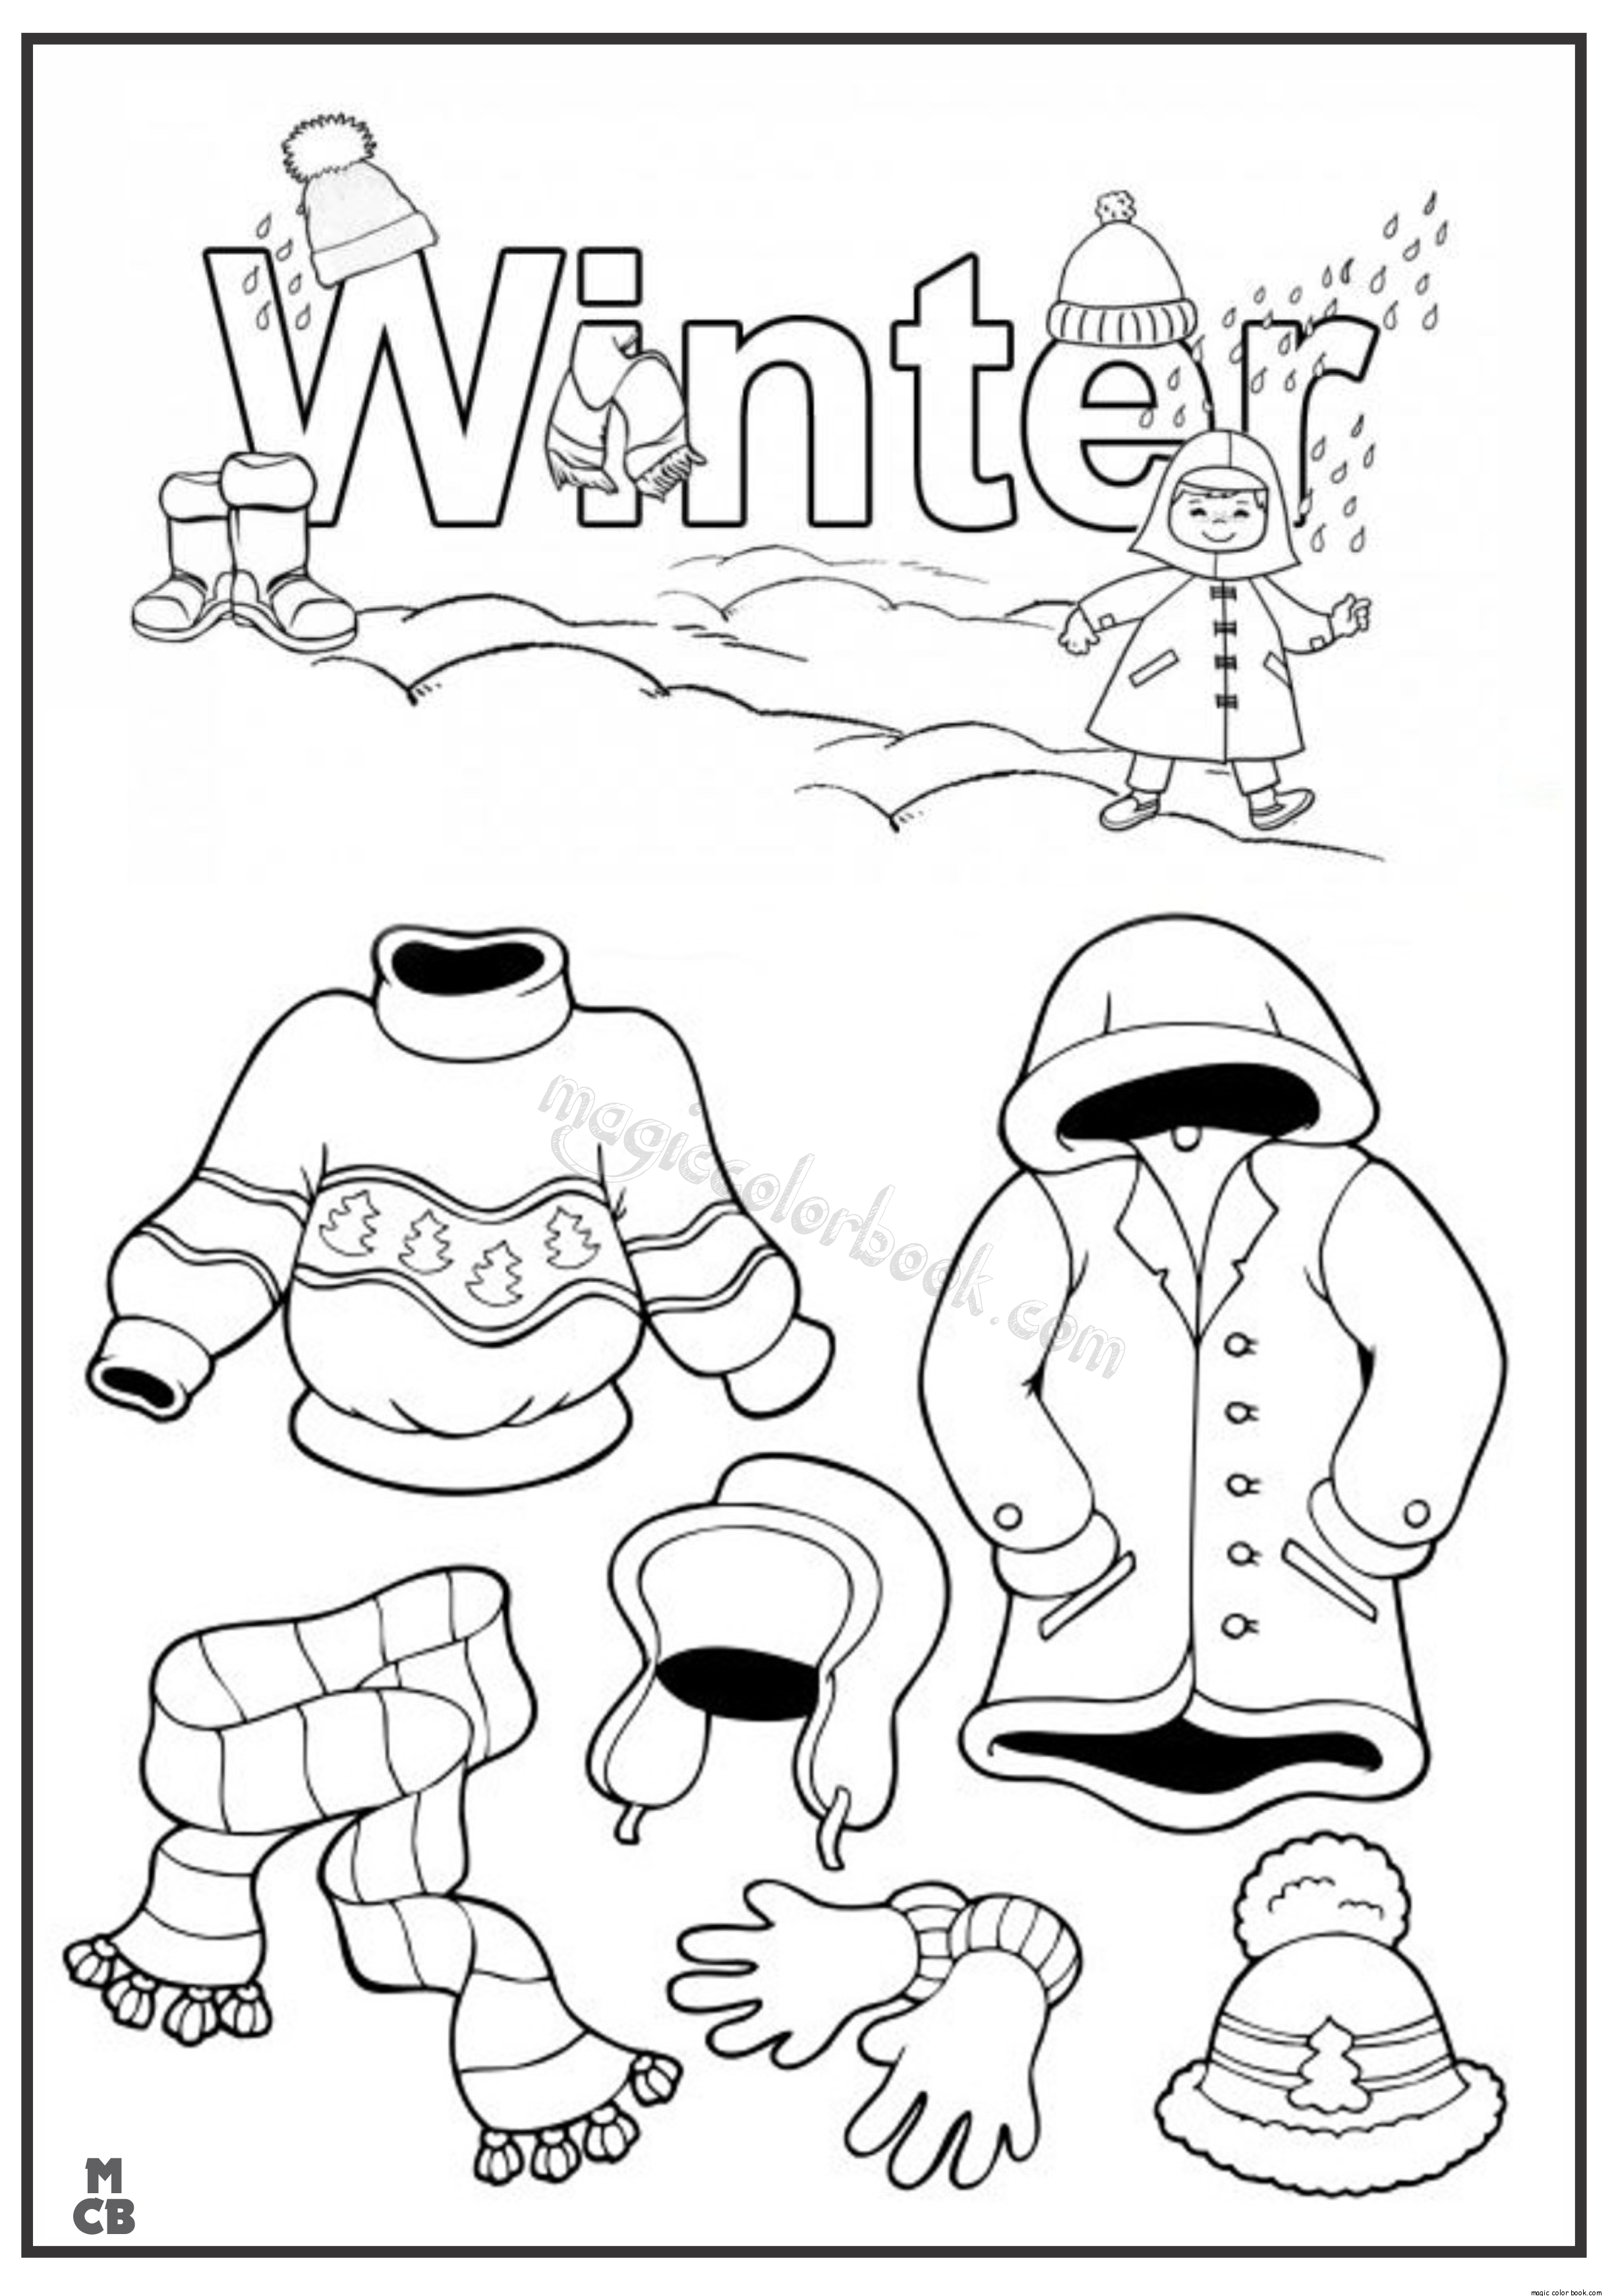 Drawing Winter season #164723 (Nature) – Printable coloring pages